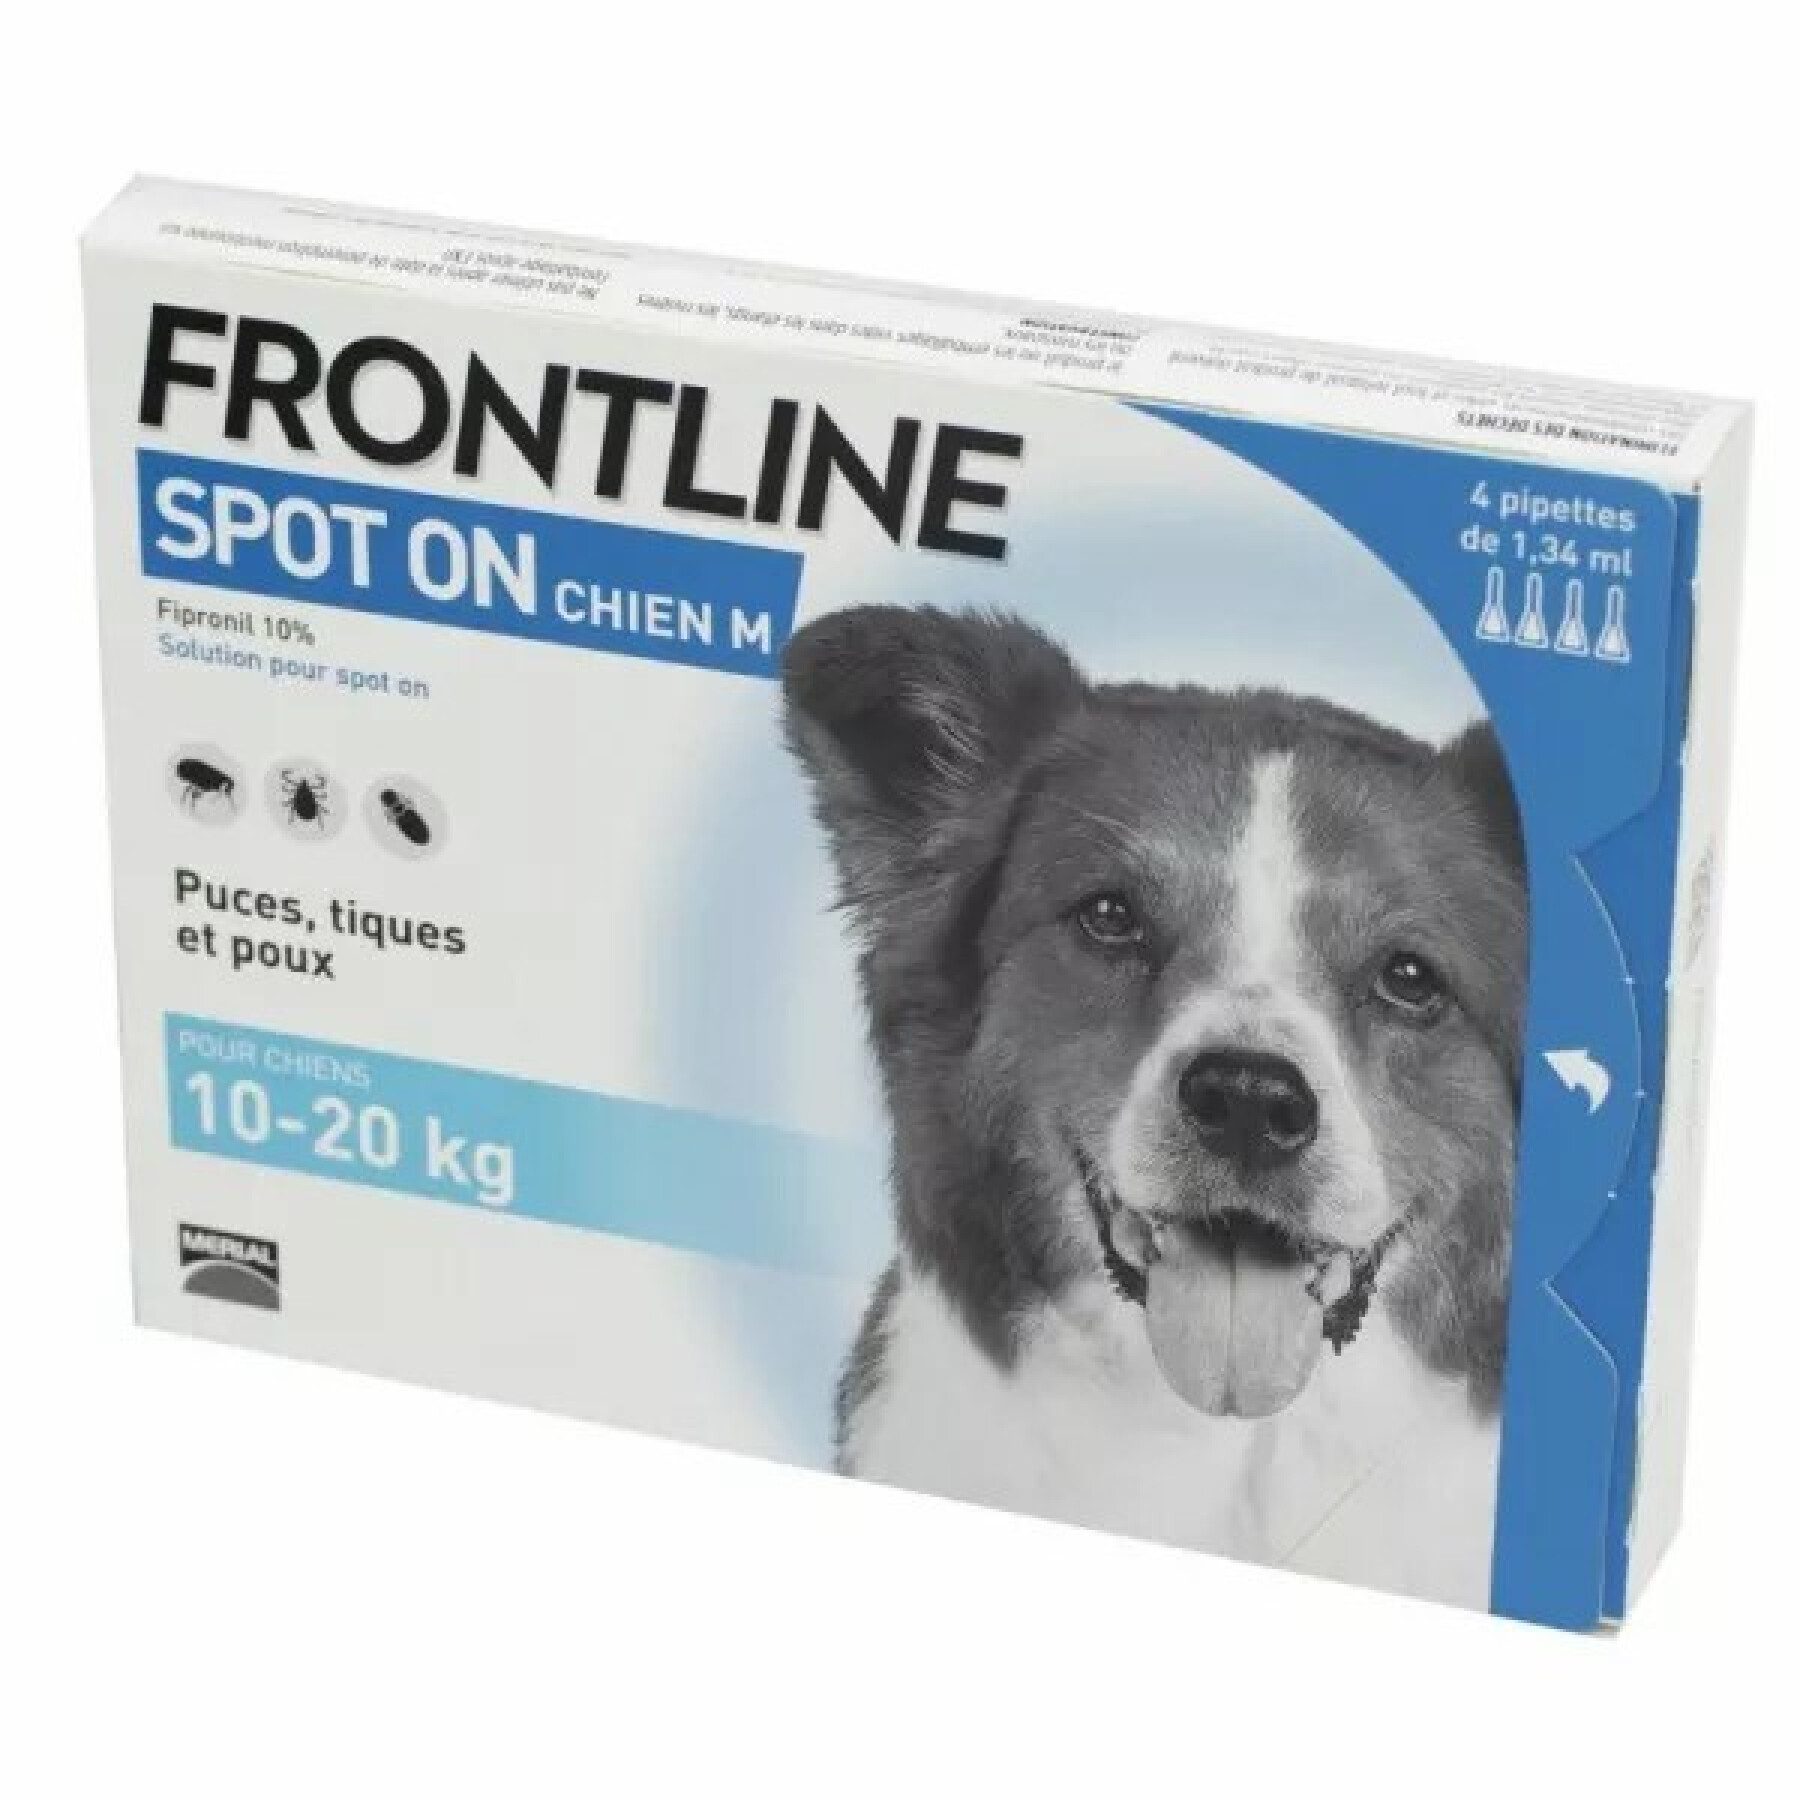 Pest control for dogs Frontline de 10/20 kg Spot On (x4)